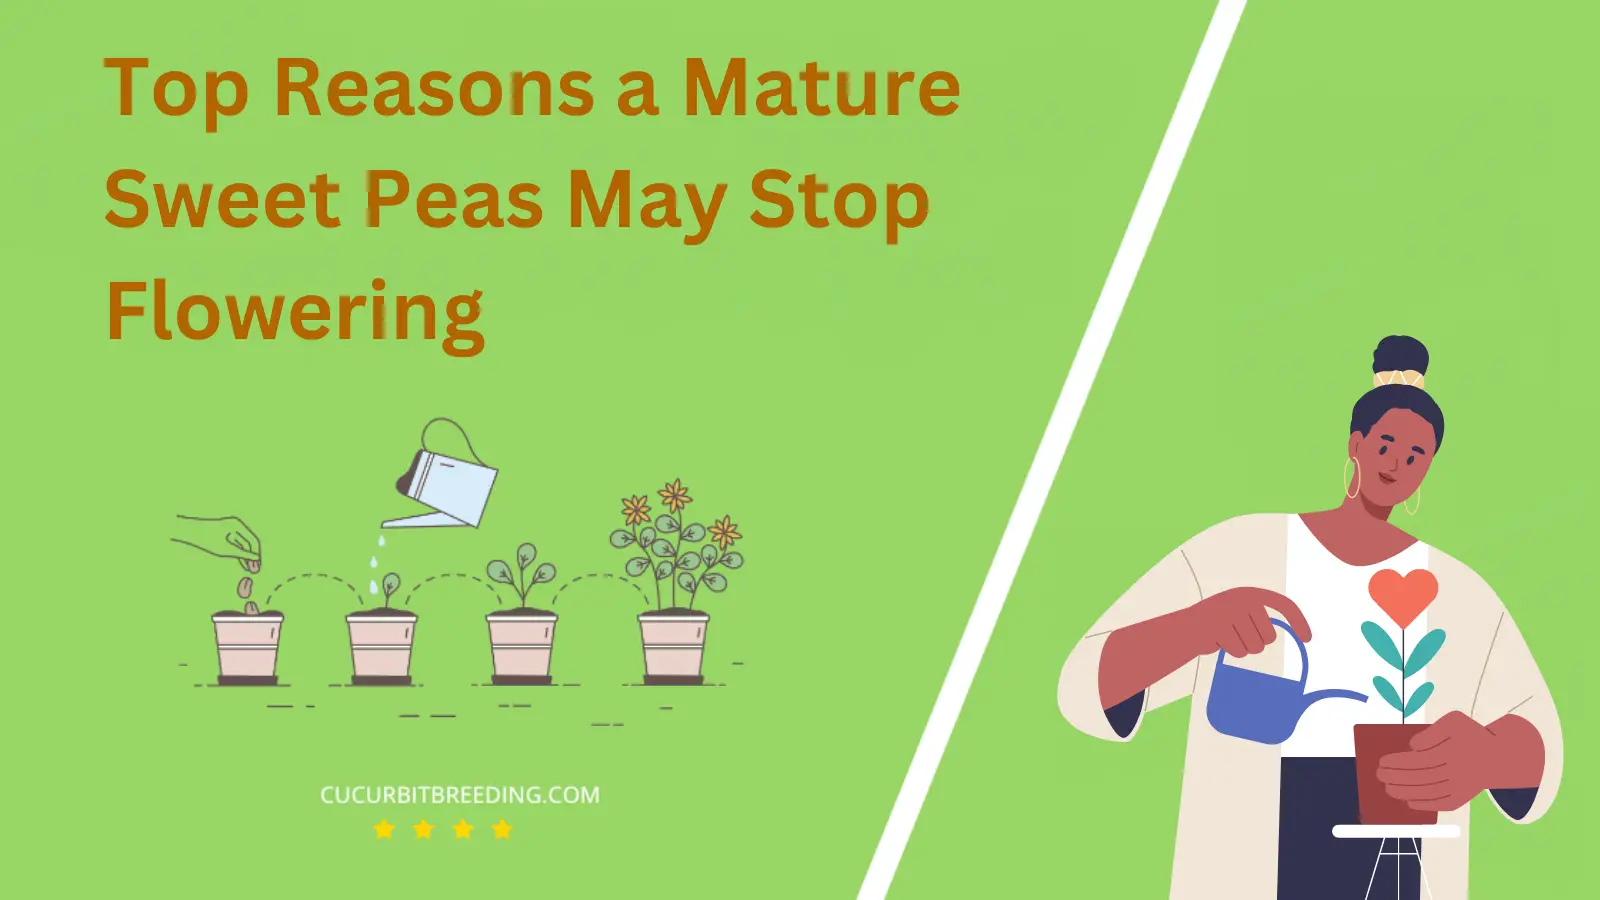 Top Reasons a Mature Sweet Peas May Stop Flowering